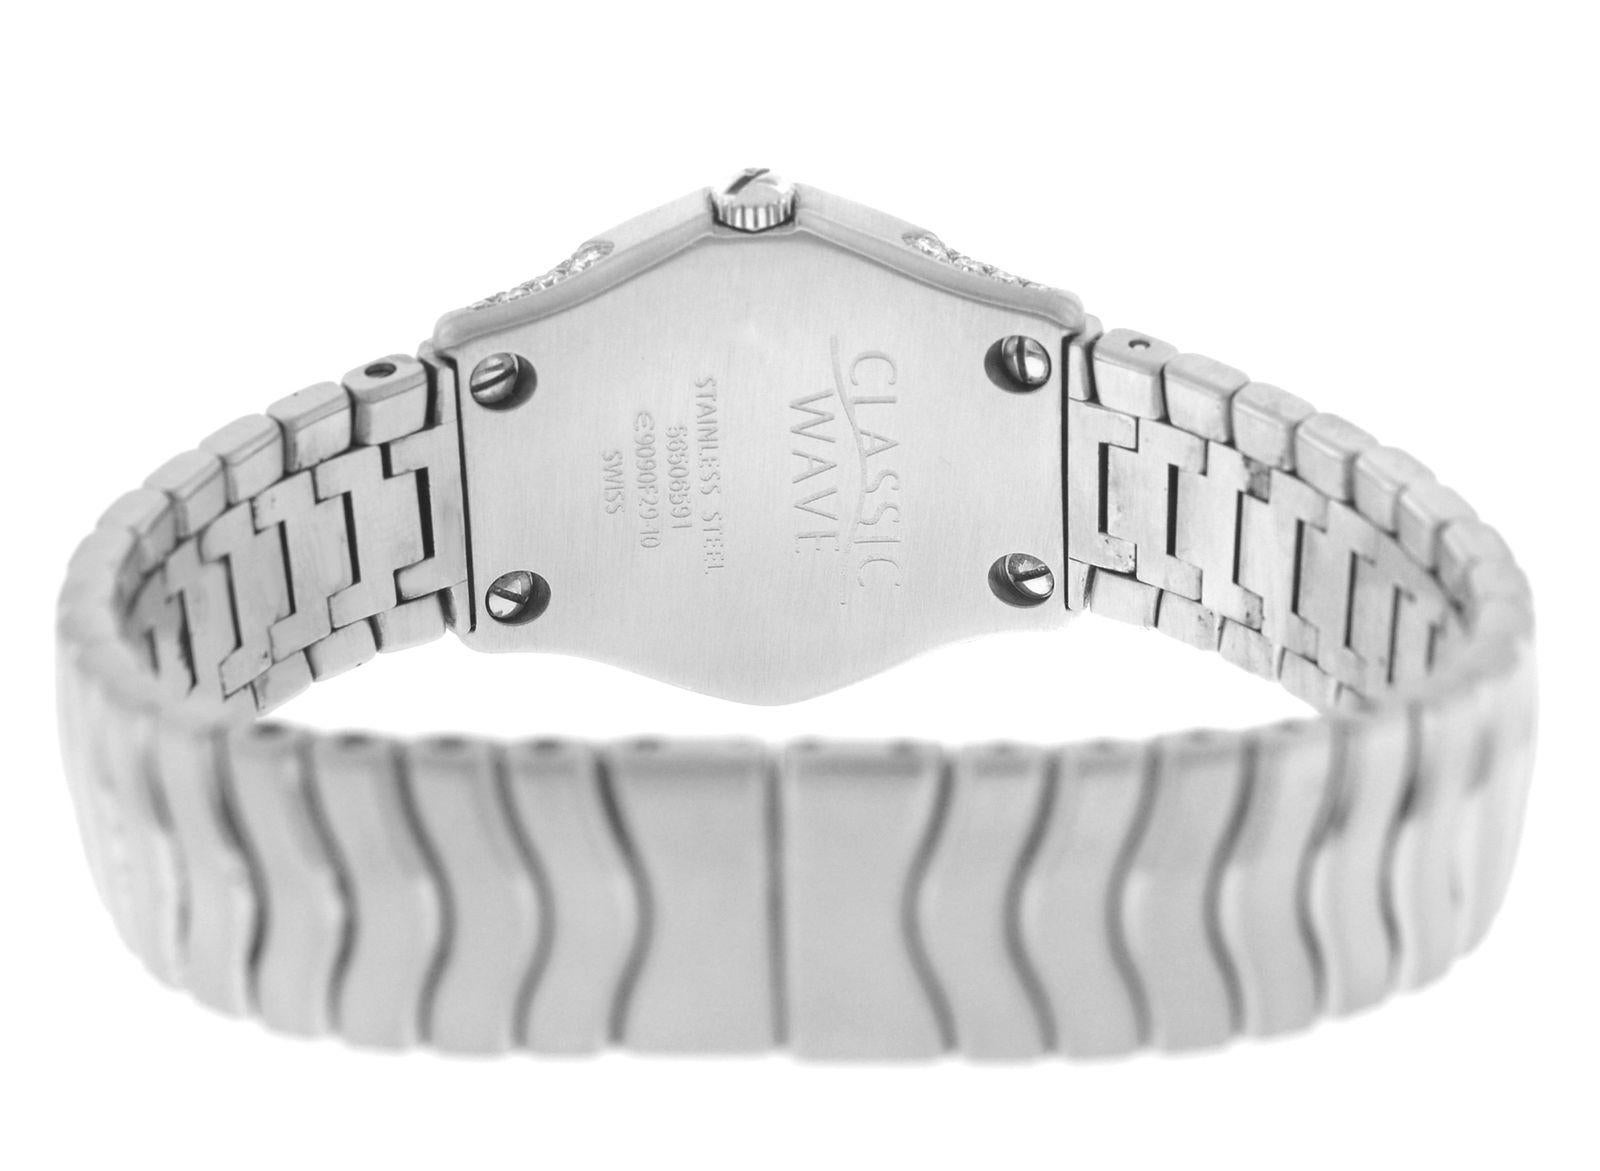 Authentic Ladies Ebel Classic Wave Diamond Quartz Watch 2